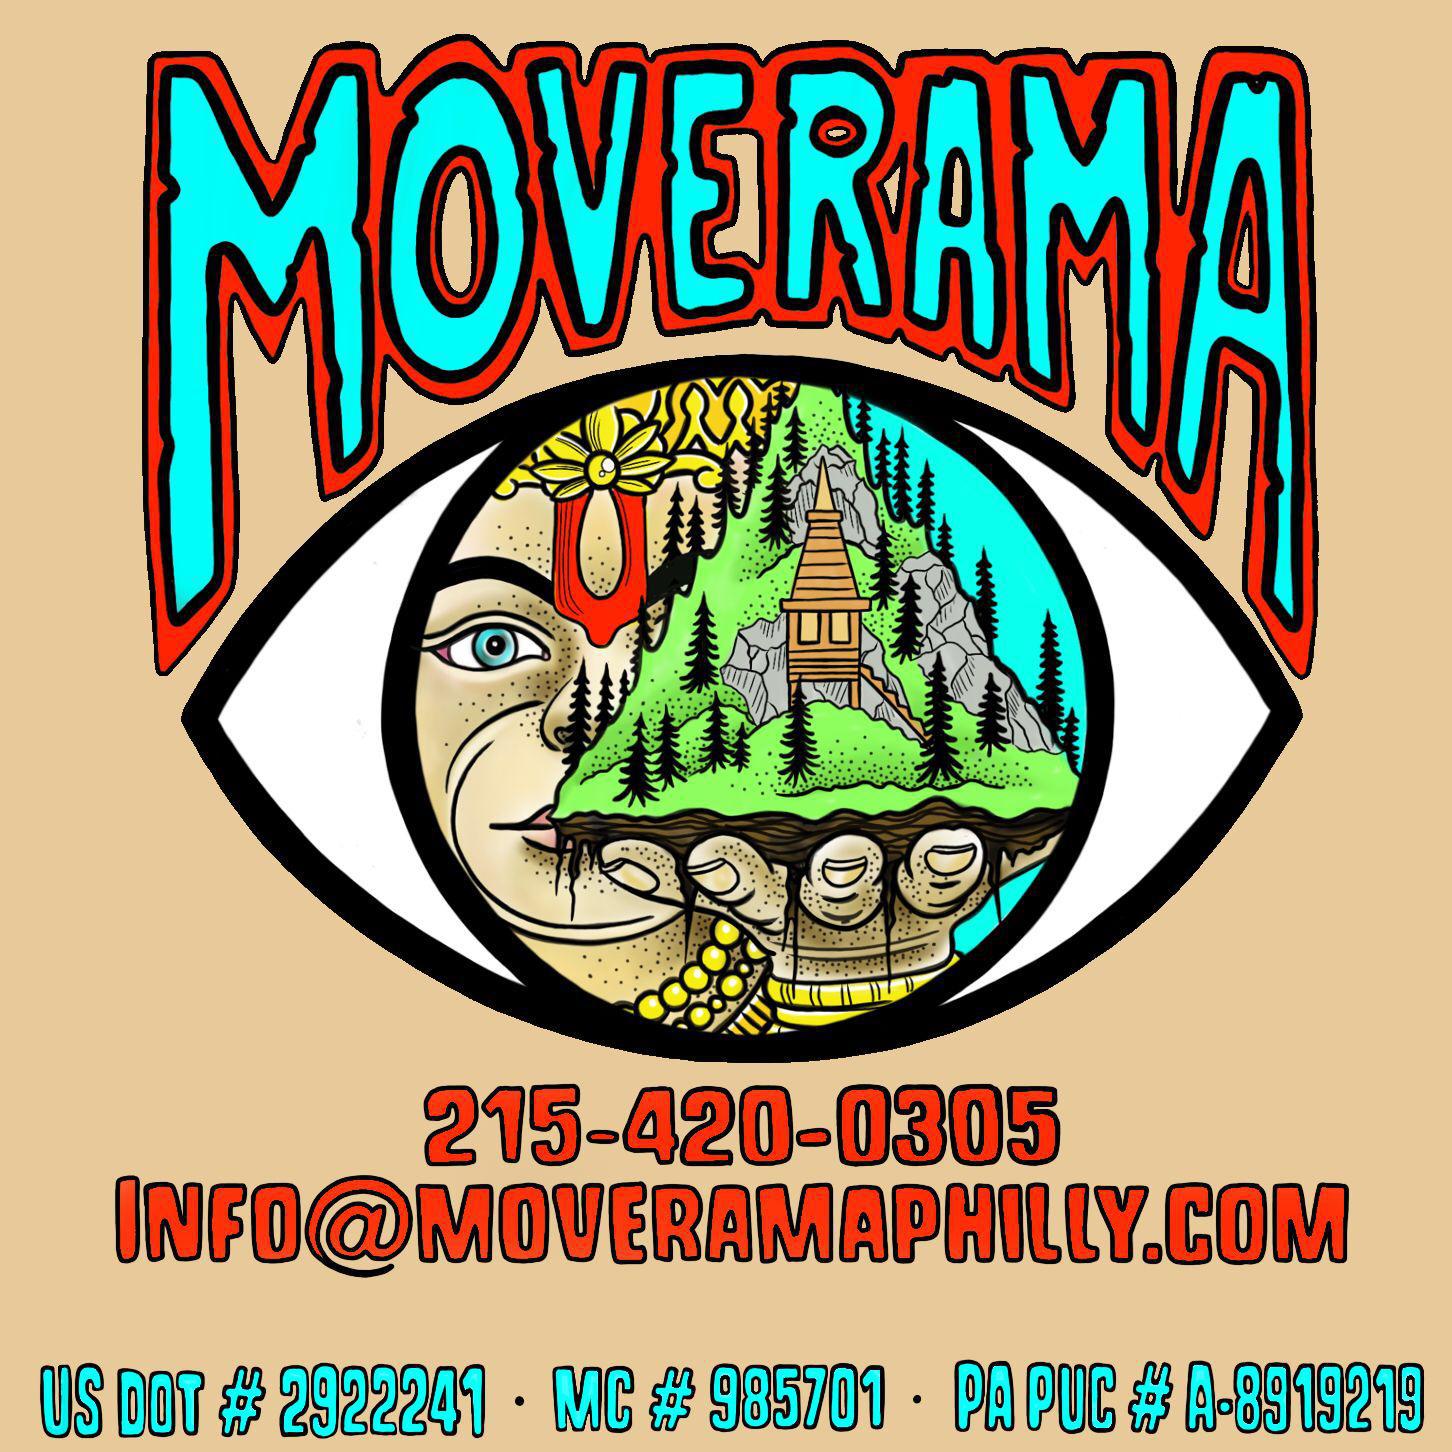 Moverama logo 1